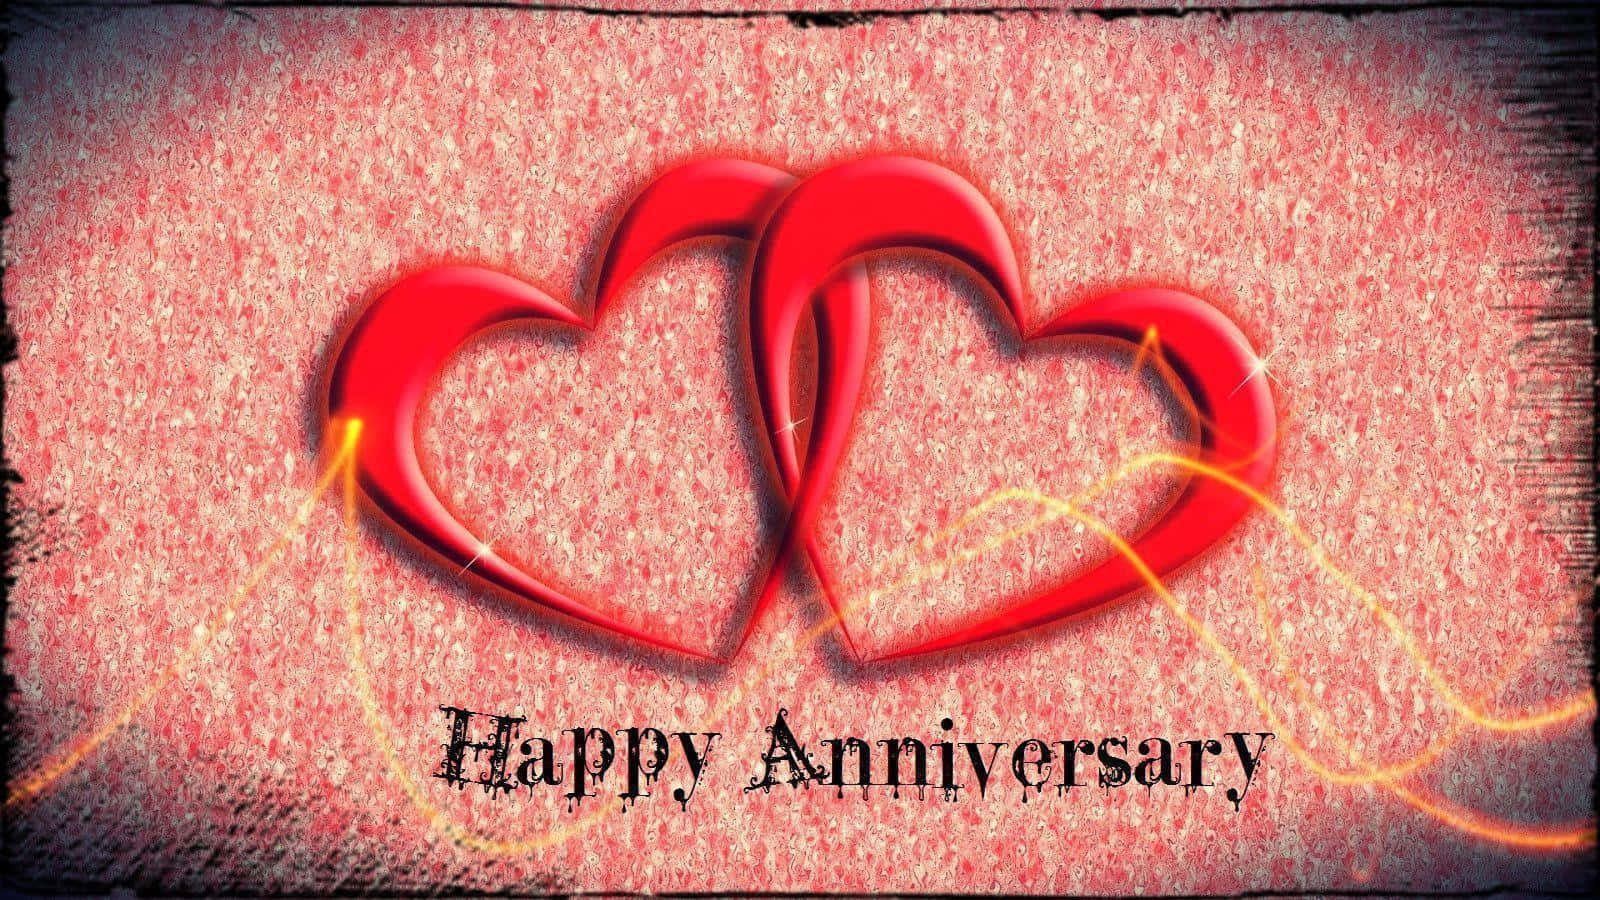 Celebrate your happy anniversary